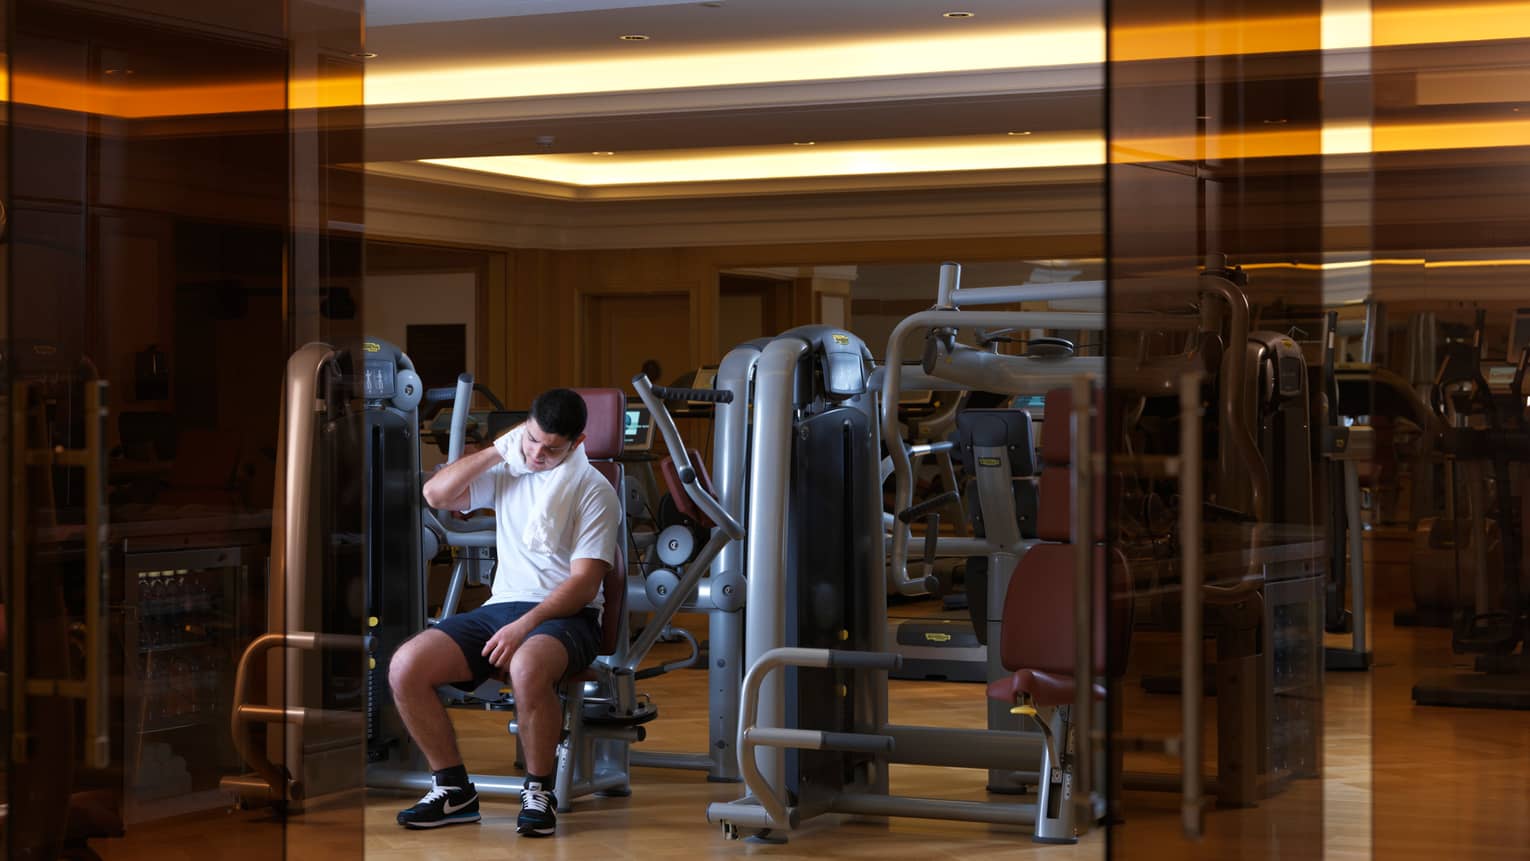 Man sits on weights machine, white towel around neck, past orange glass doors in fitness centre